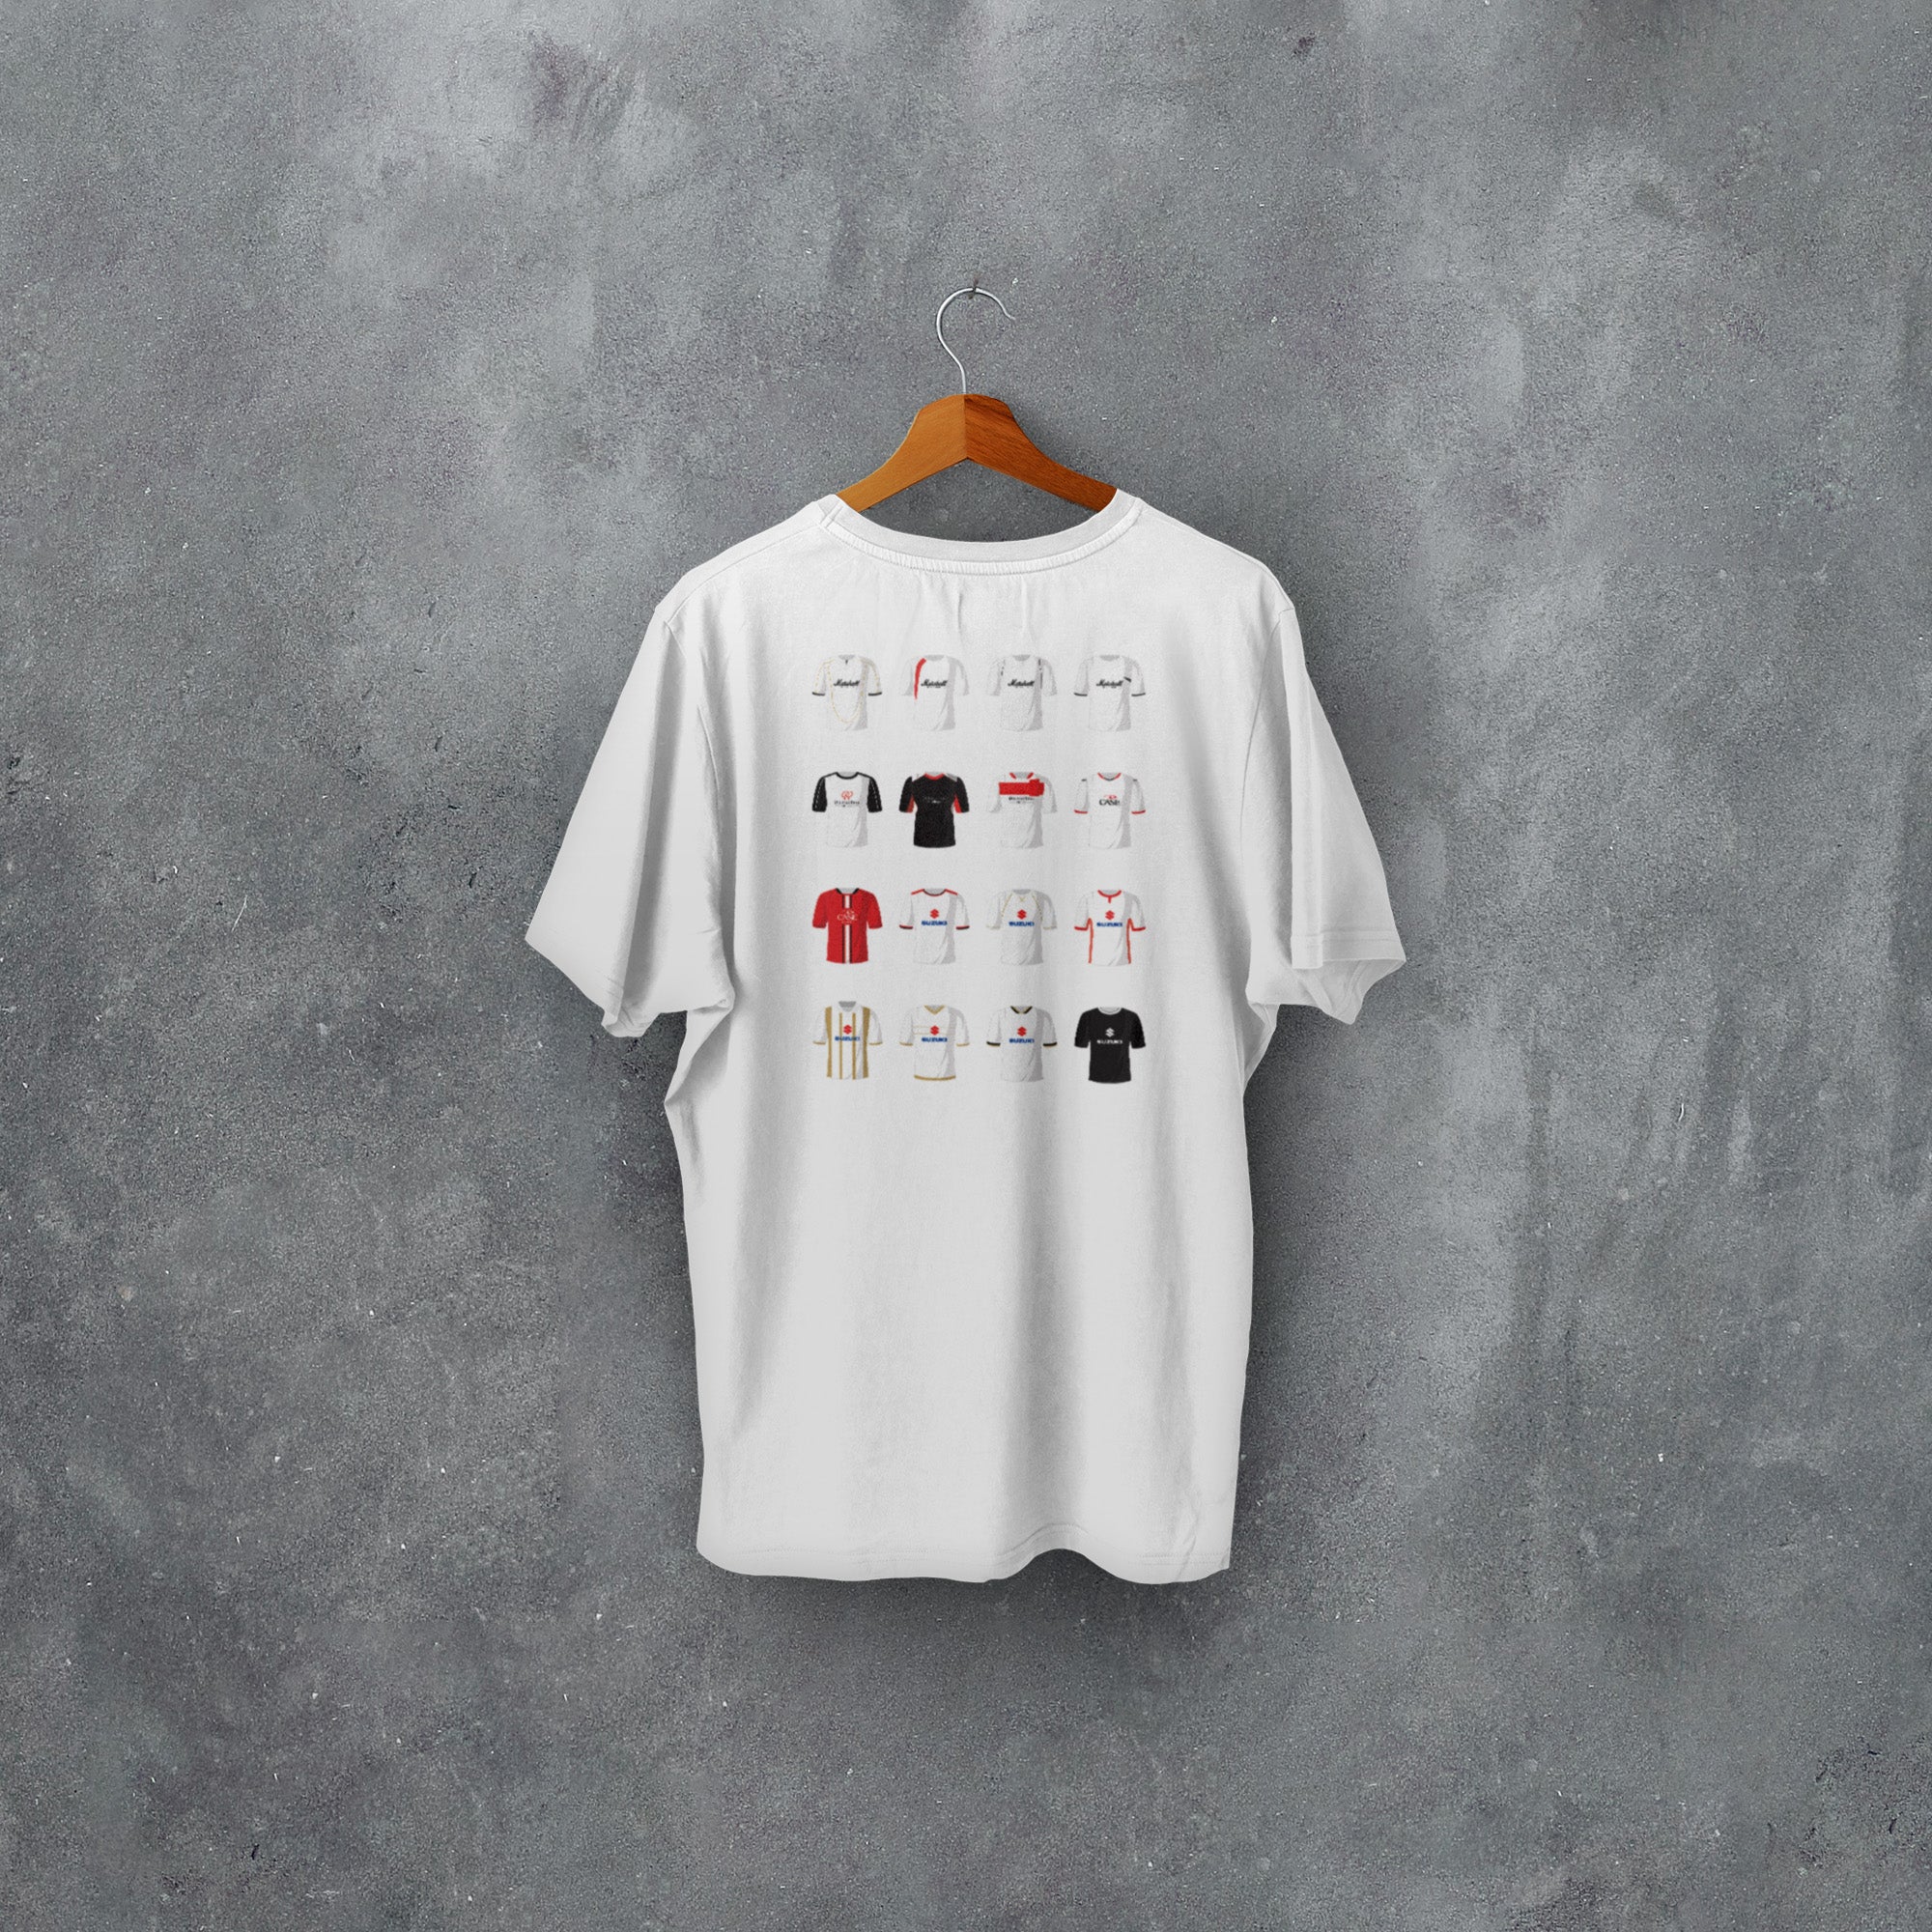 MK Dons Classic Kits Football T-Shirt